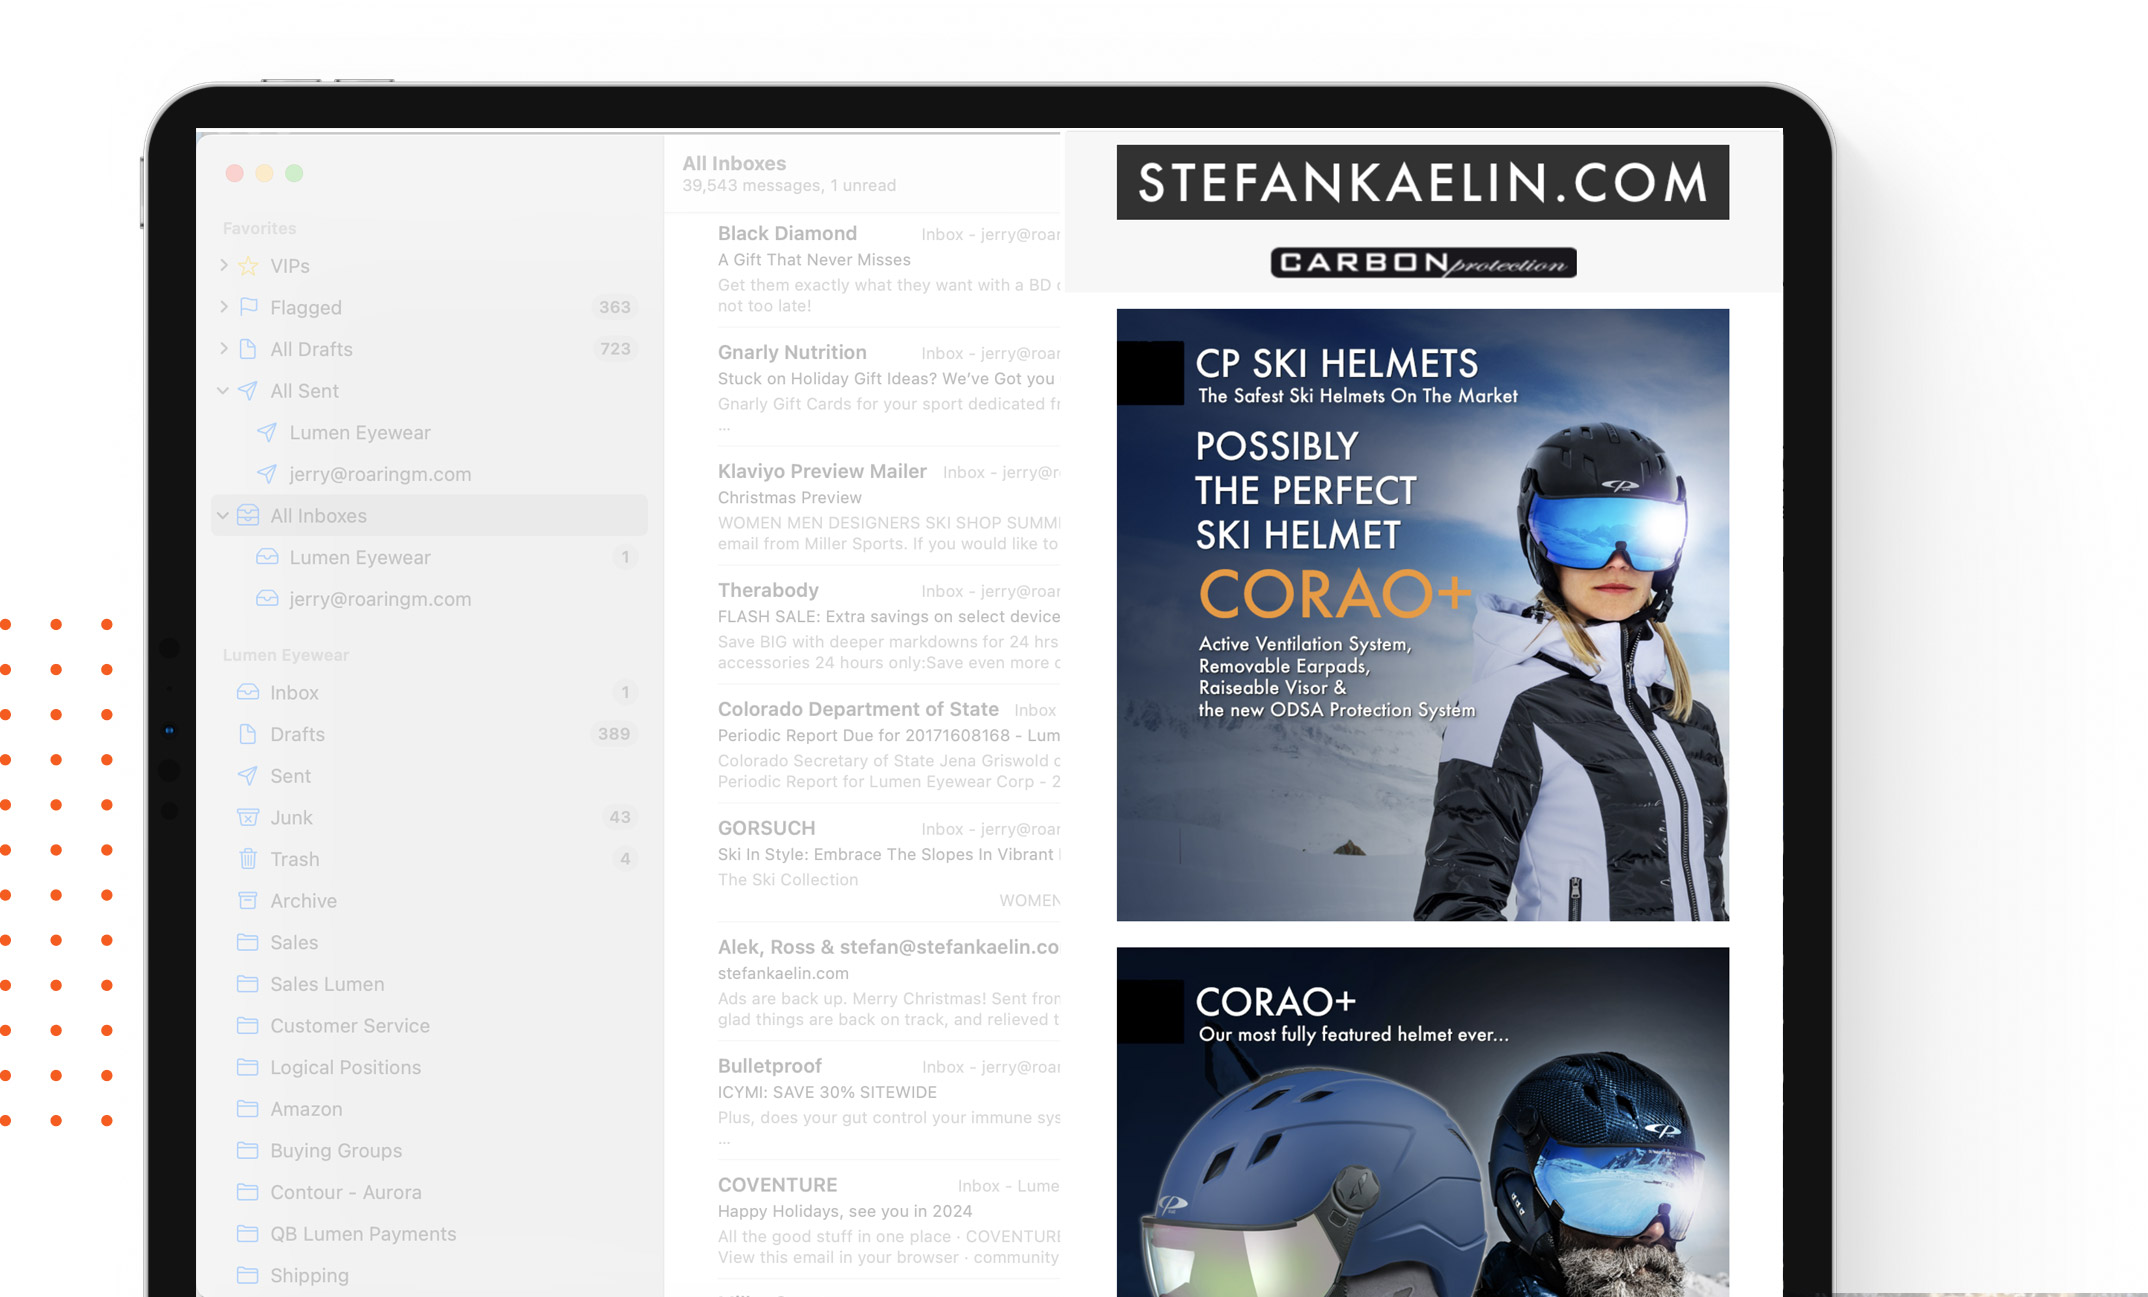 Email Marketing Example of Stefan Kealin Design